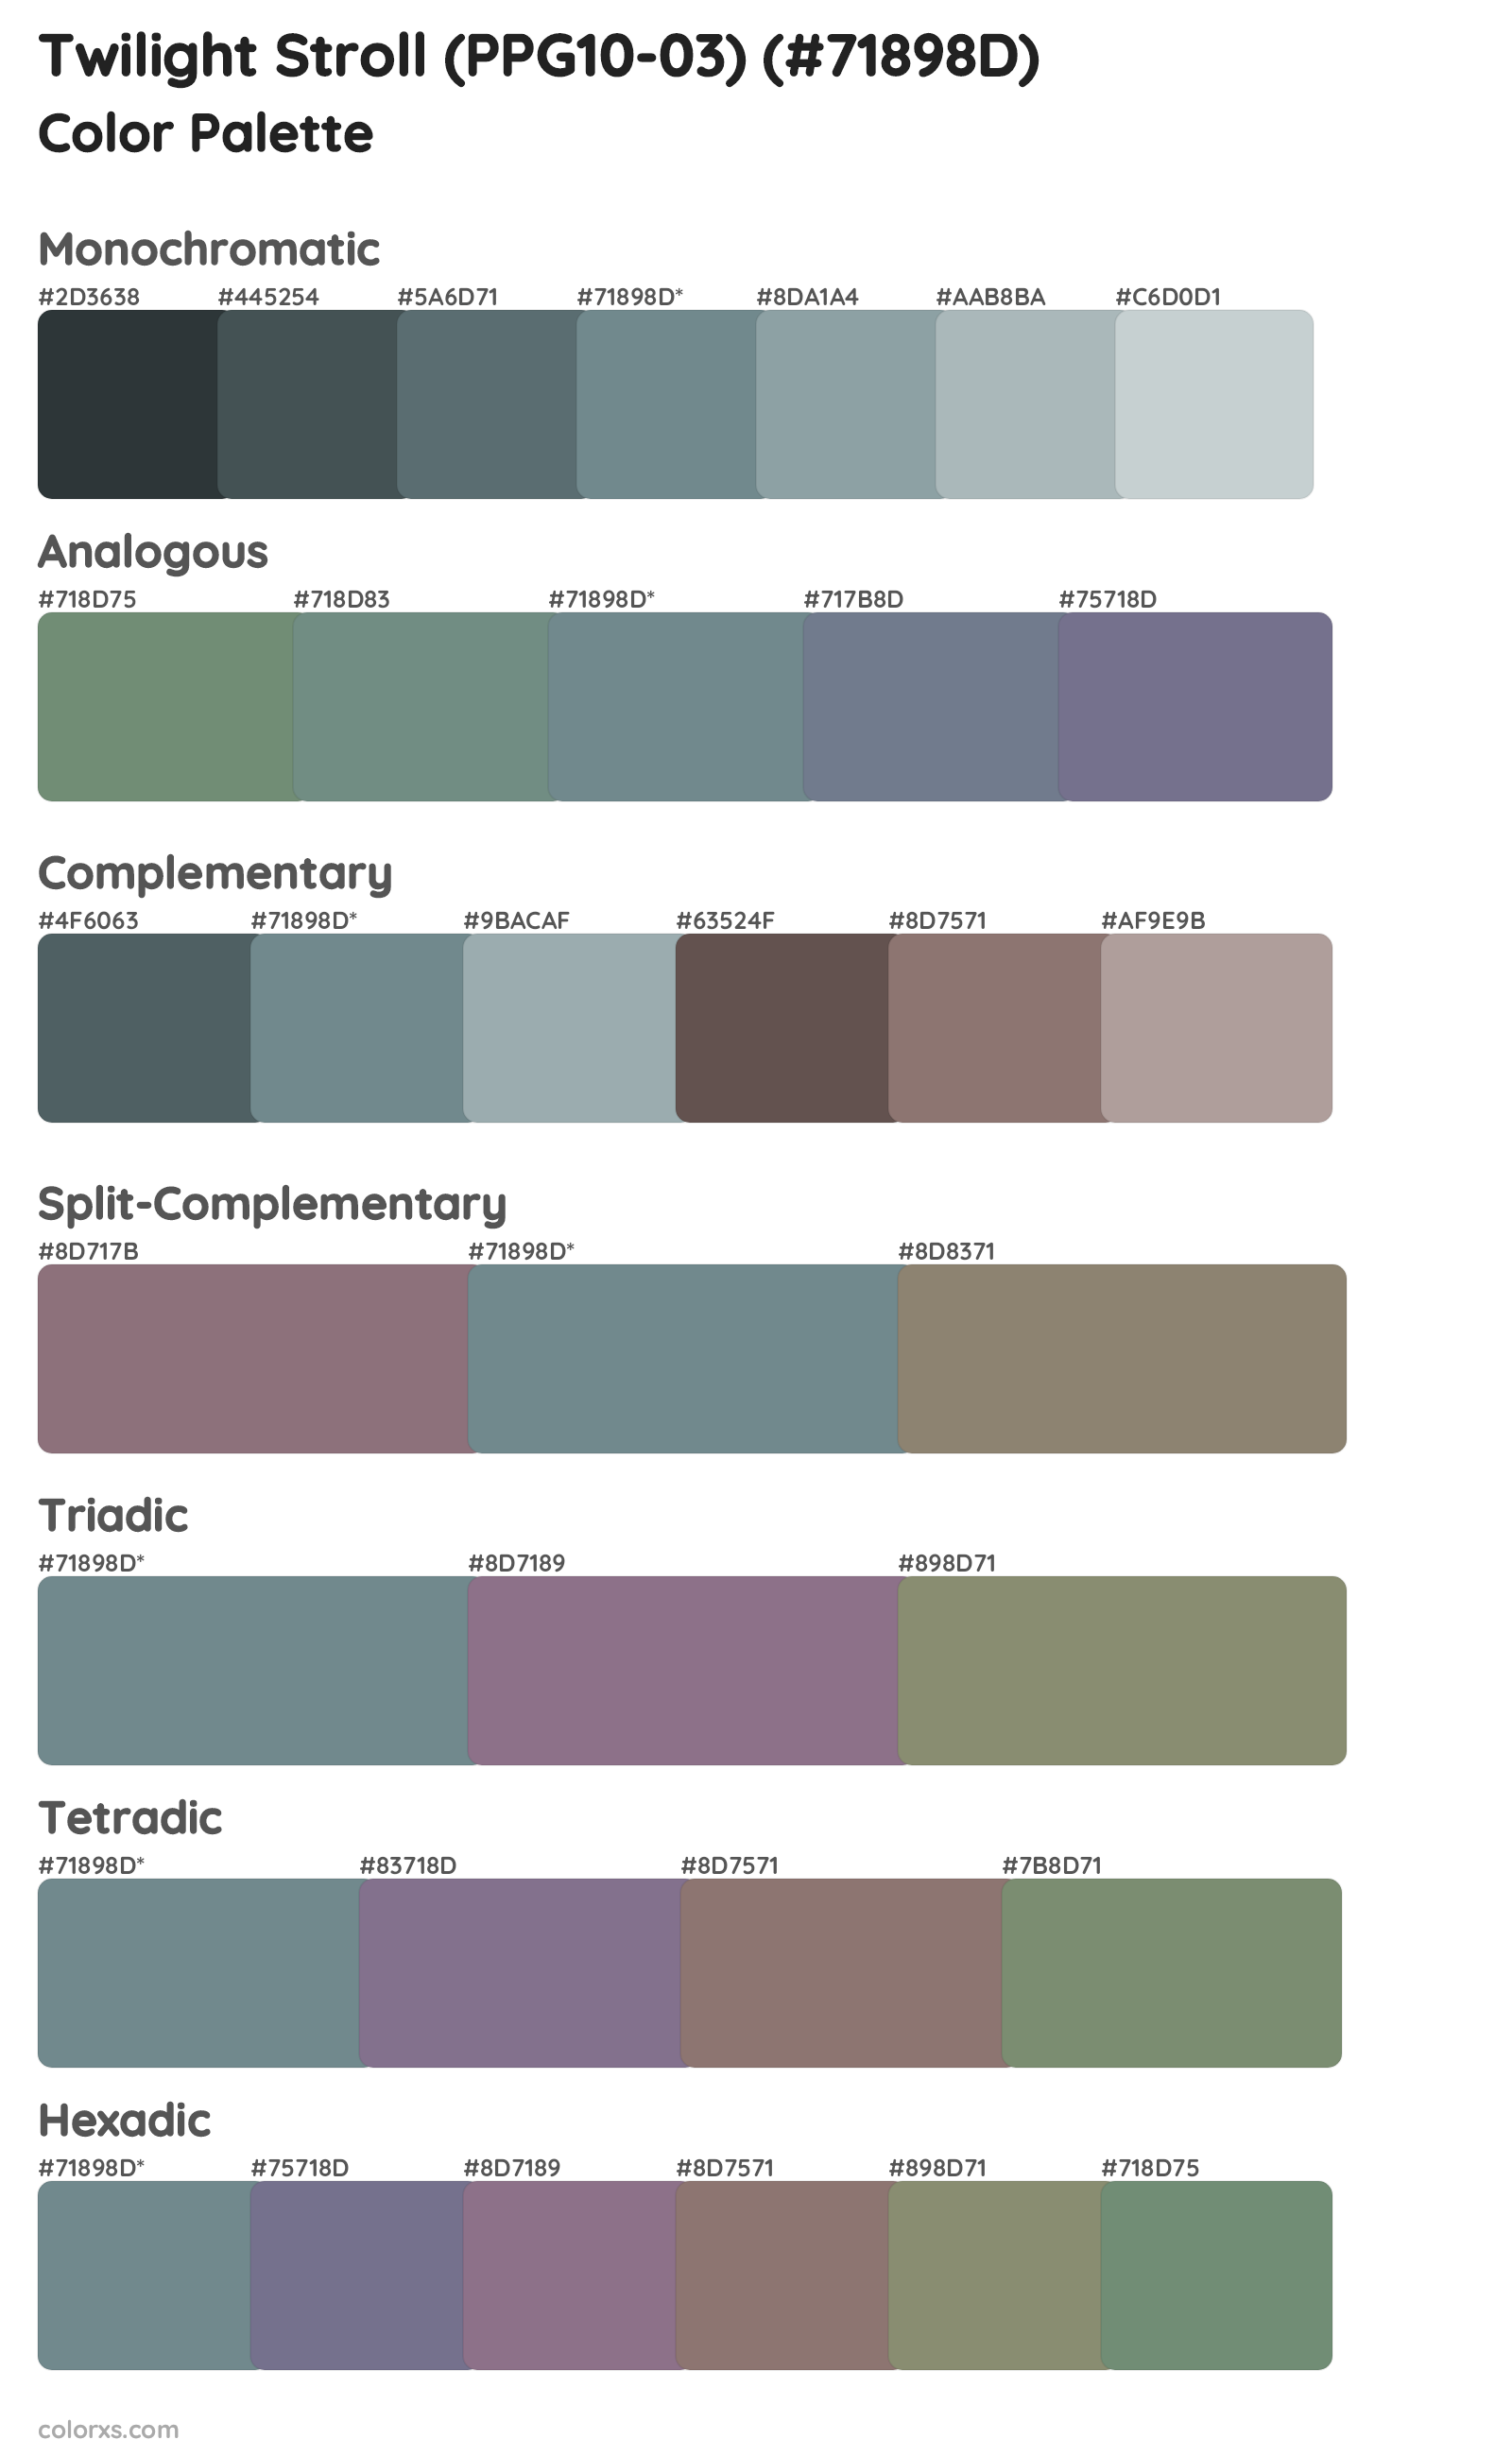 Twilight Stroll (PPG10-03) Color Scheme Palettes